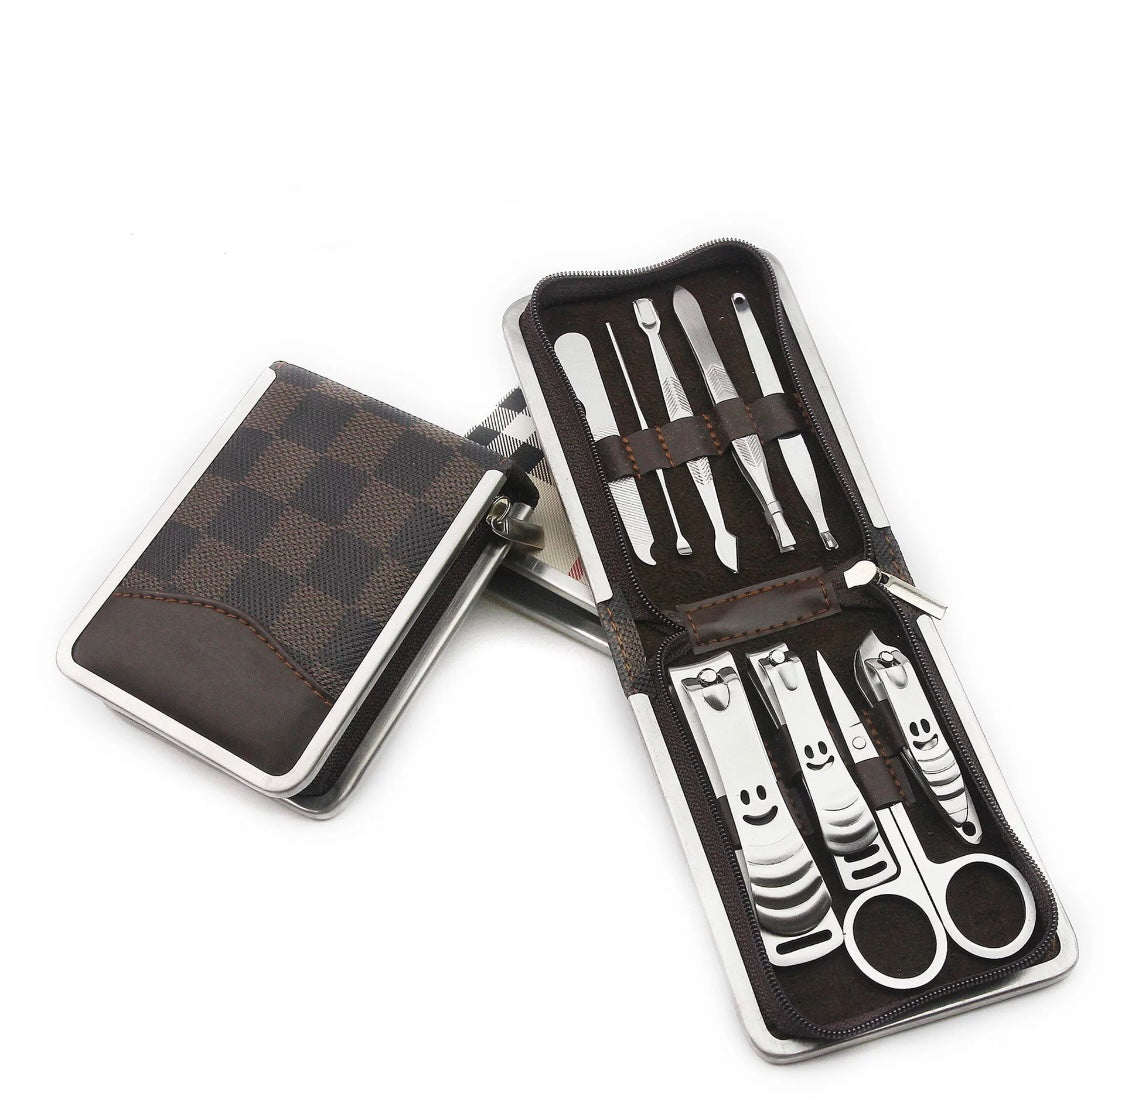 Designer leather nail grooming kit